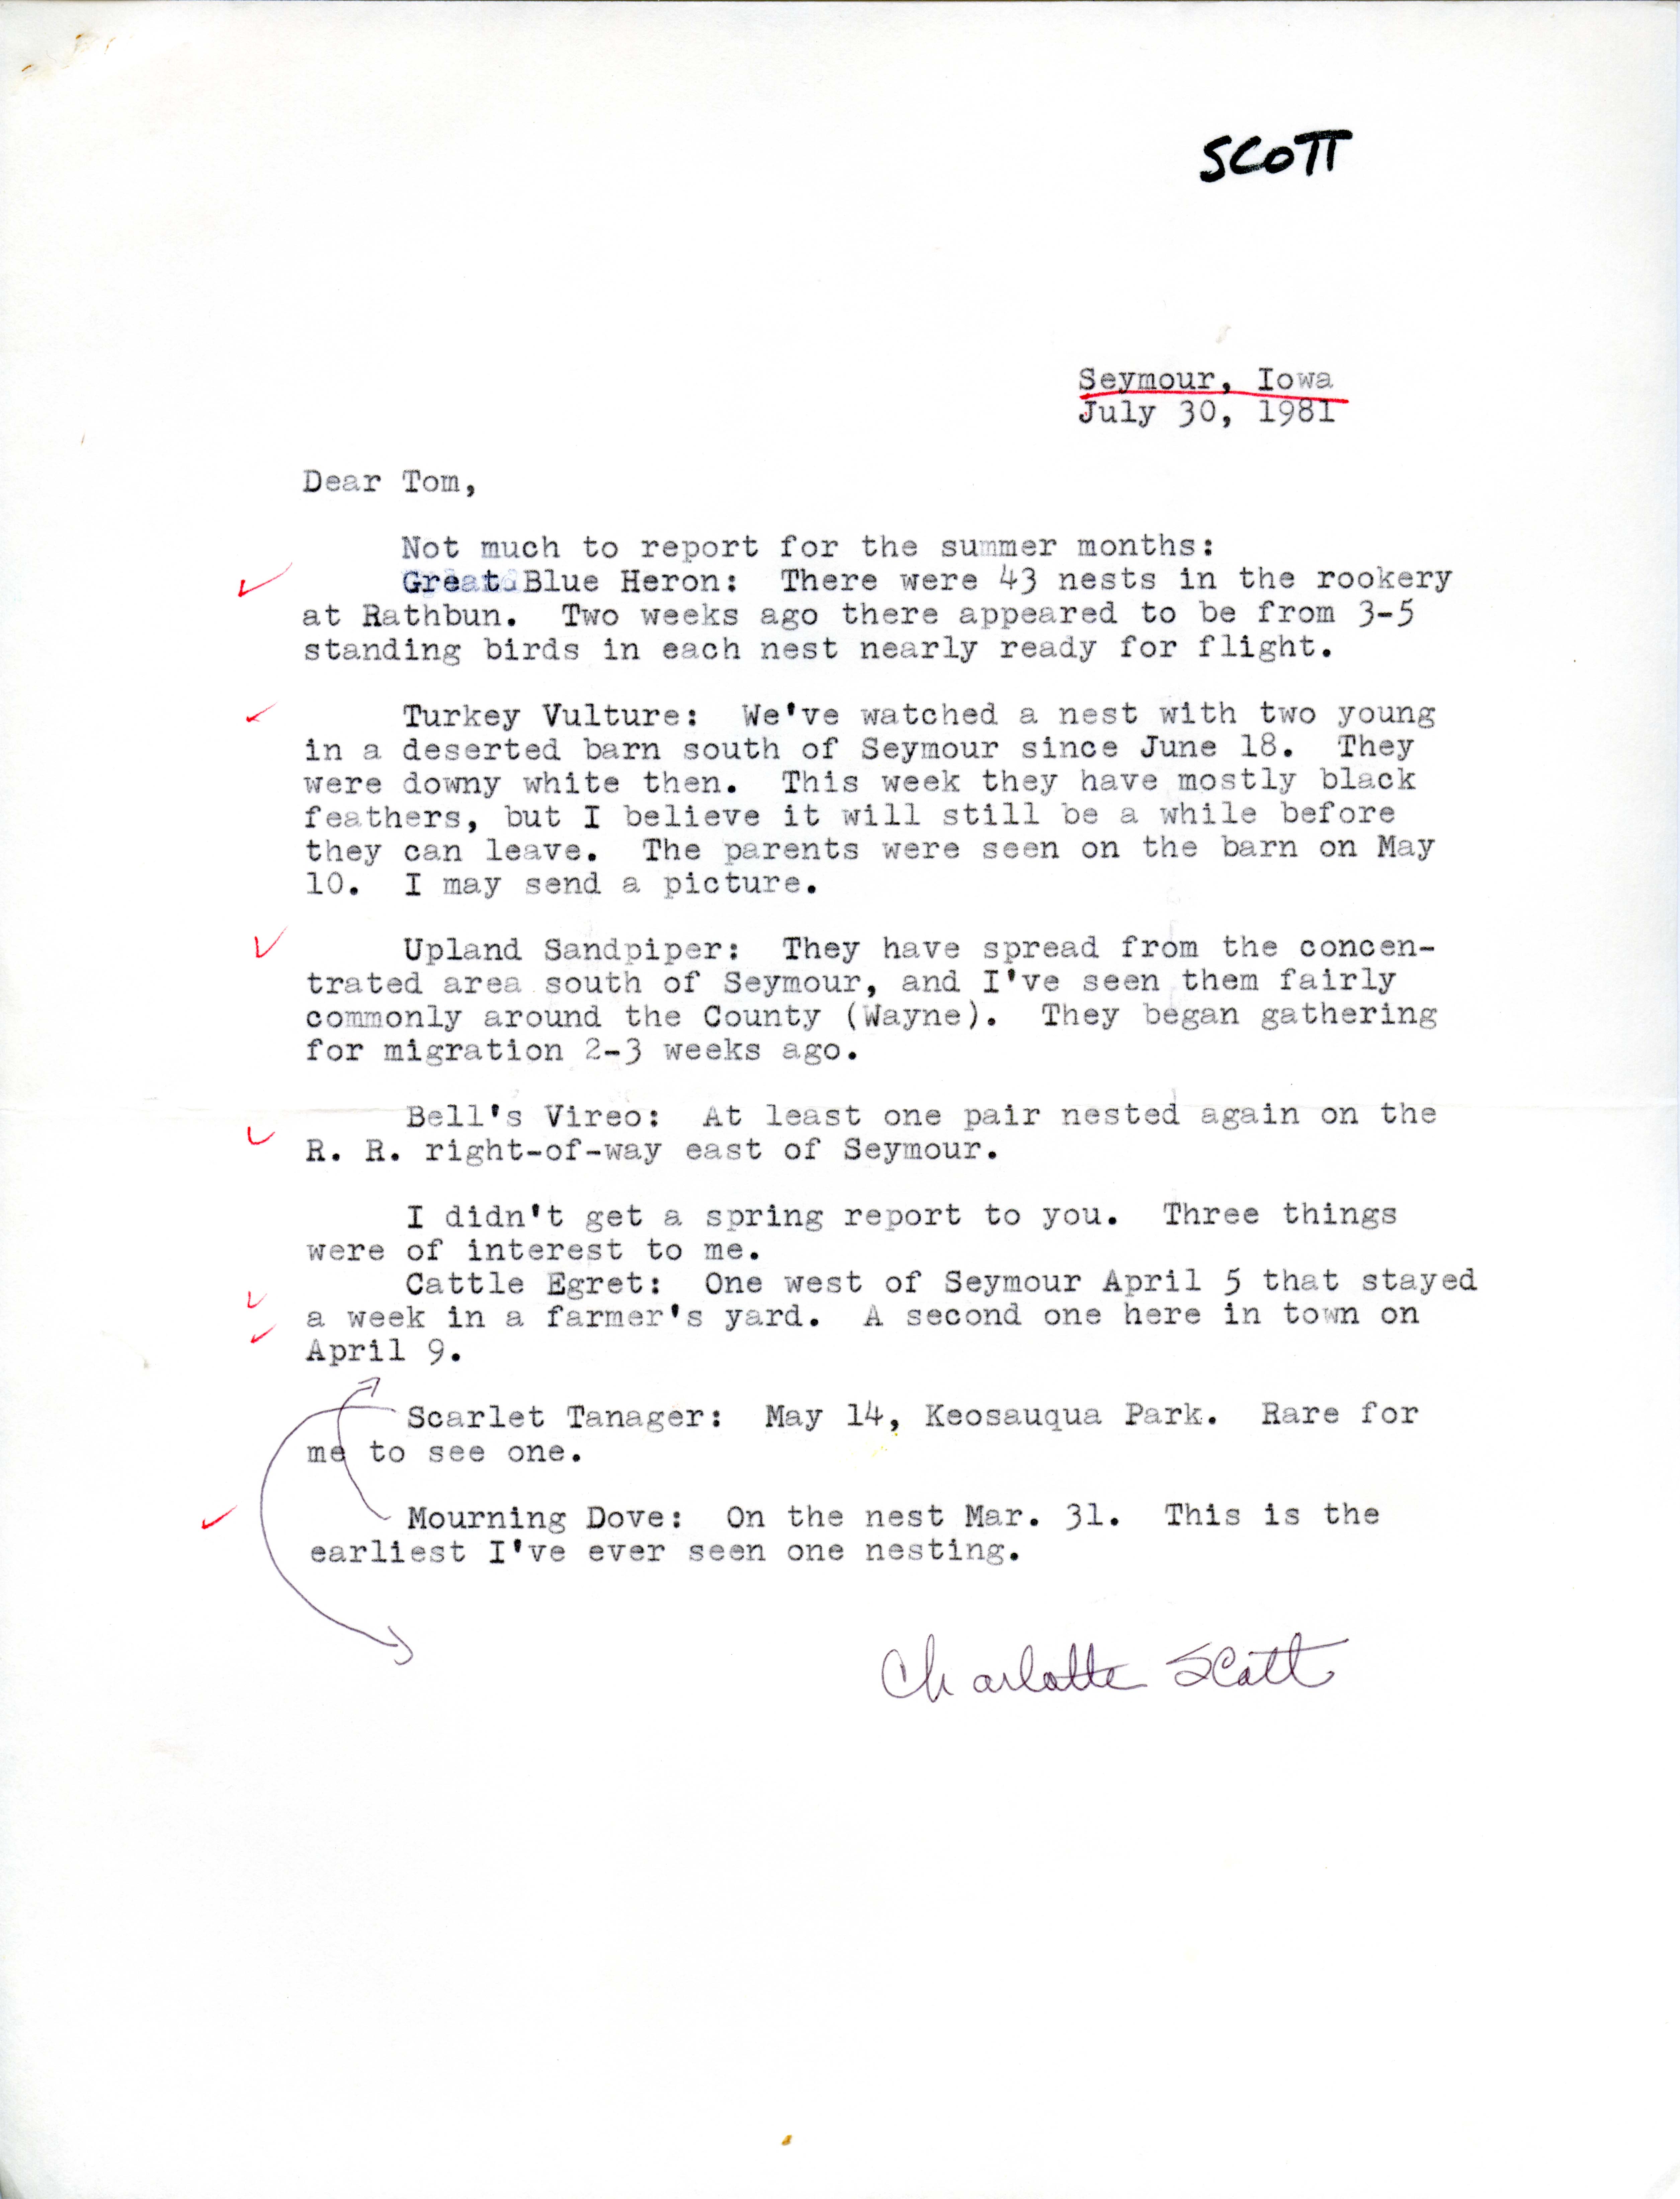 Charlotte Scott letter to Thomas H. Kent regarding summer bird sightings, July 30, 1981